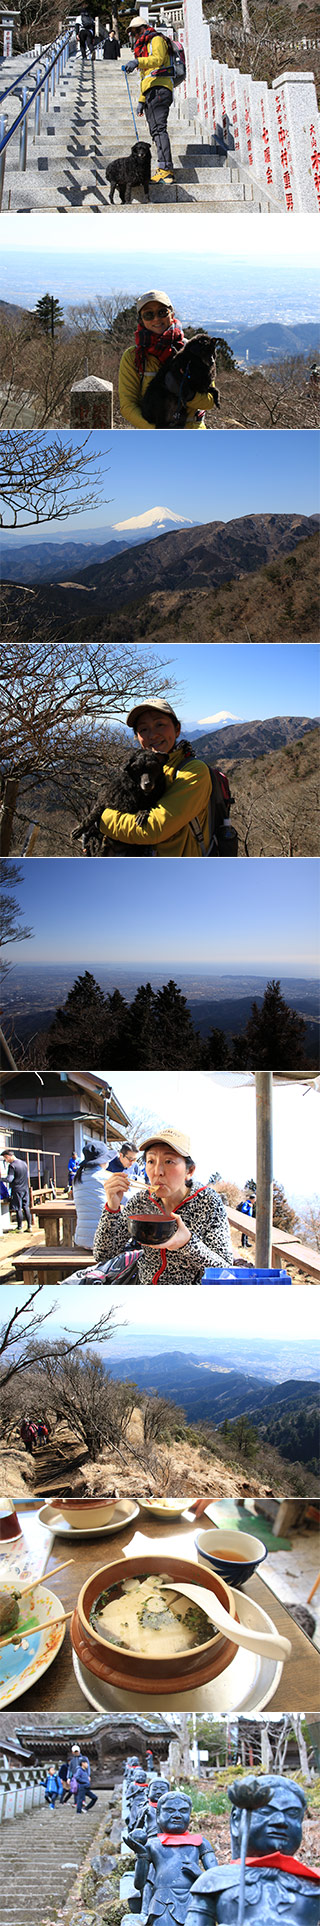 Hiking at Mt. Oyama